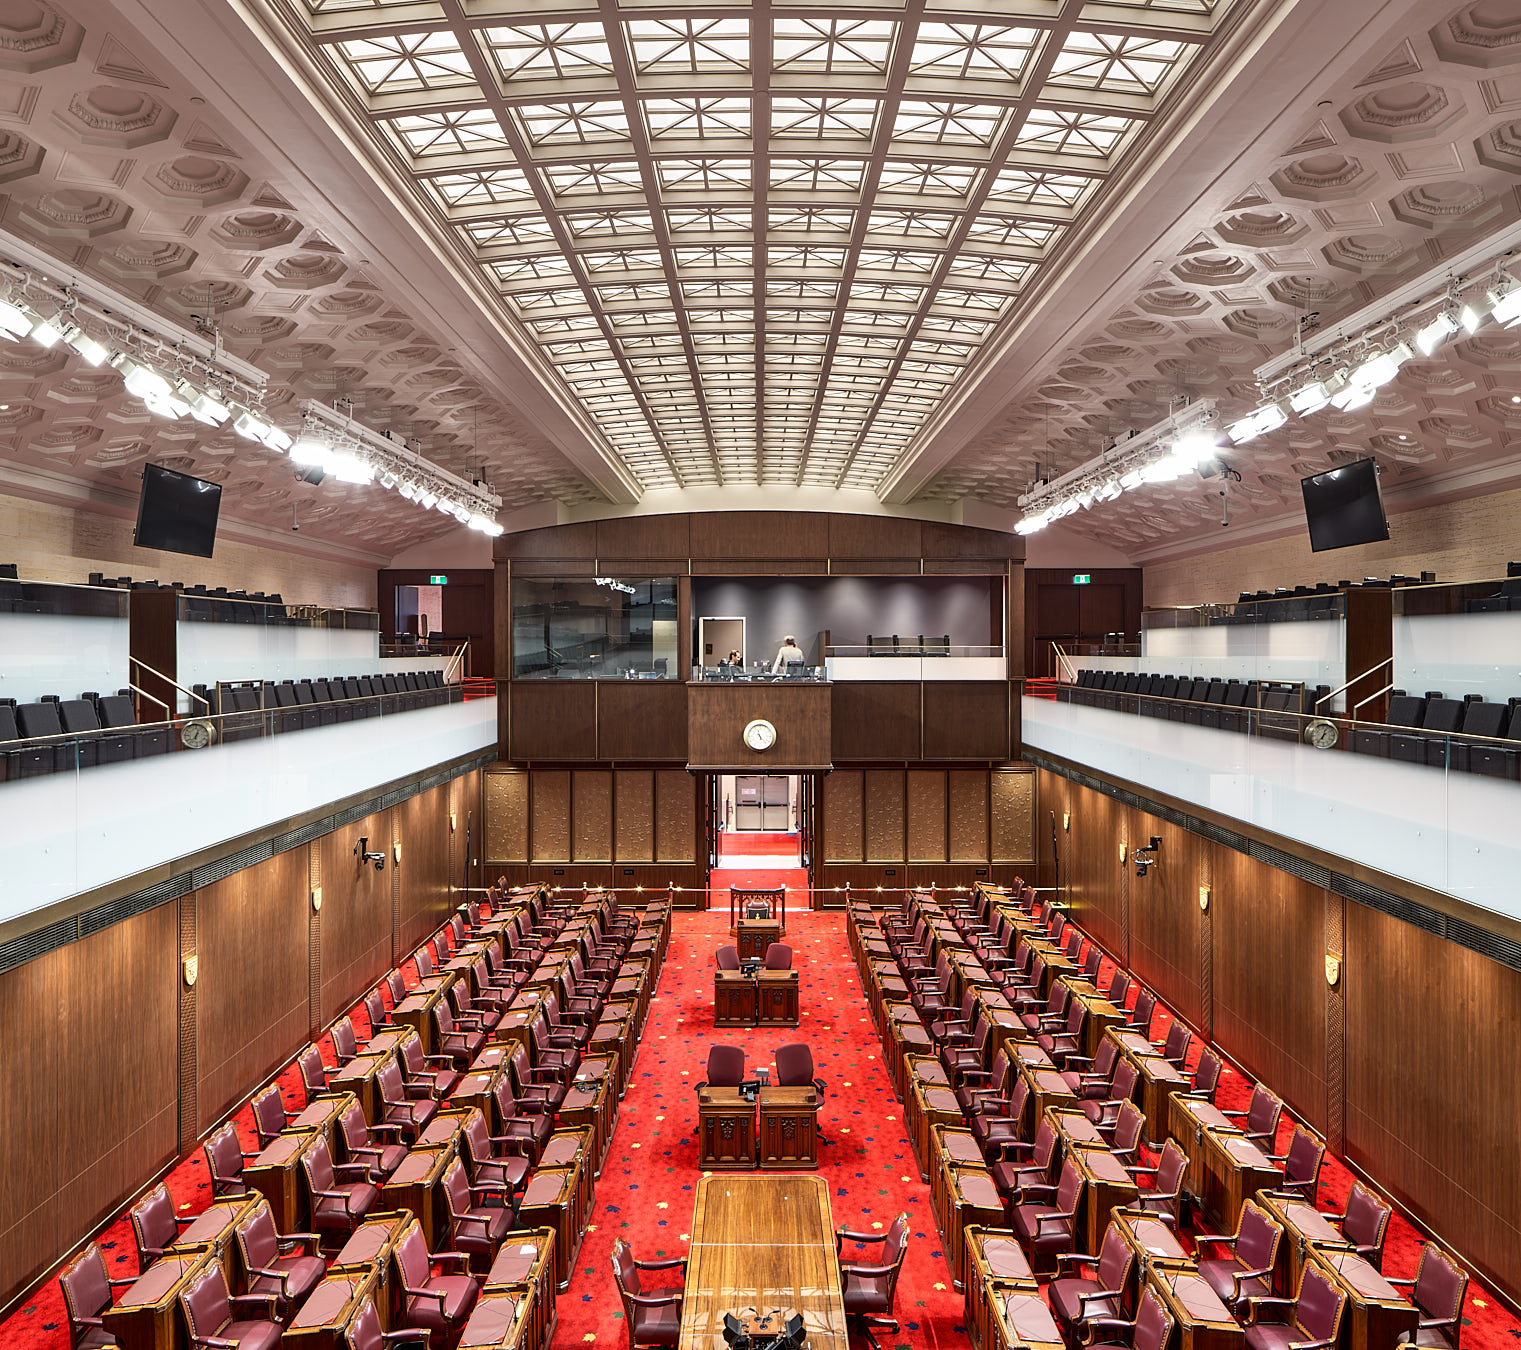 The interior of the Senate of Canada